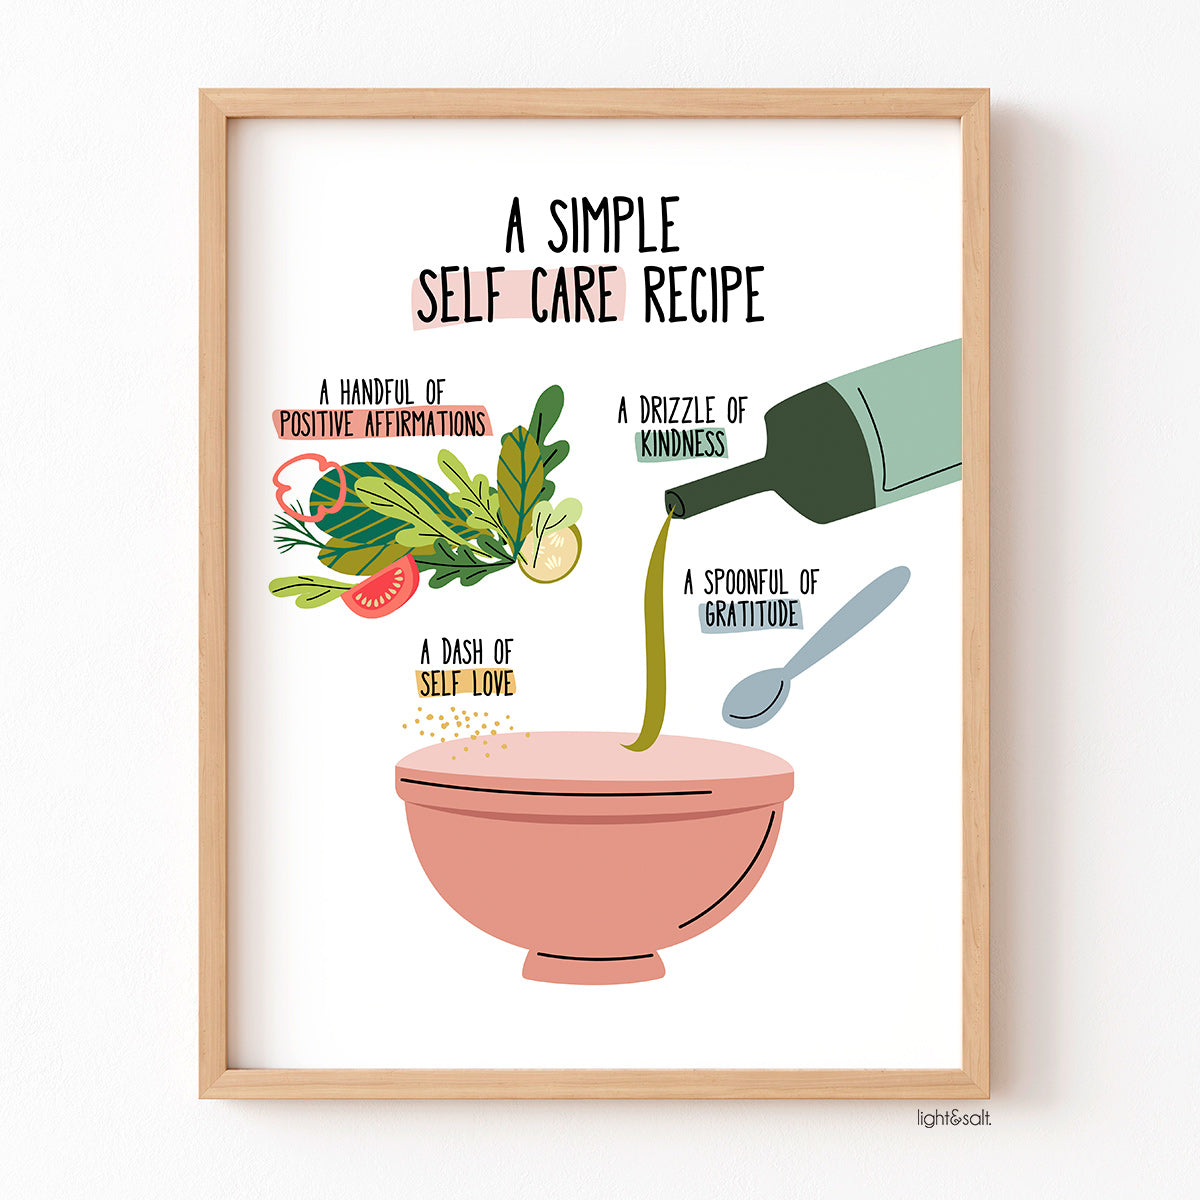 A simple self care recipe poster